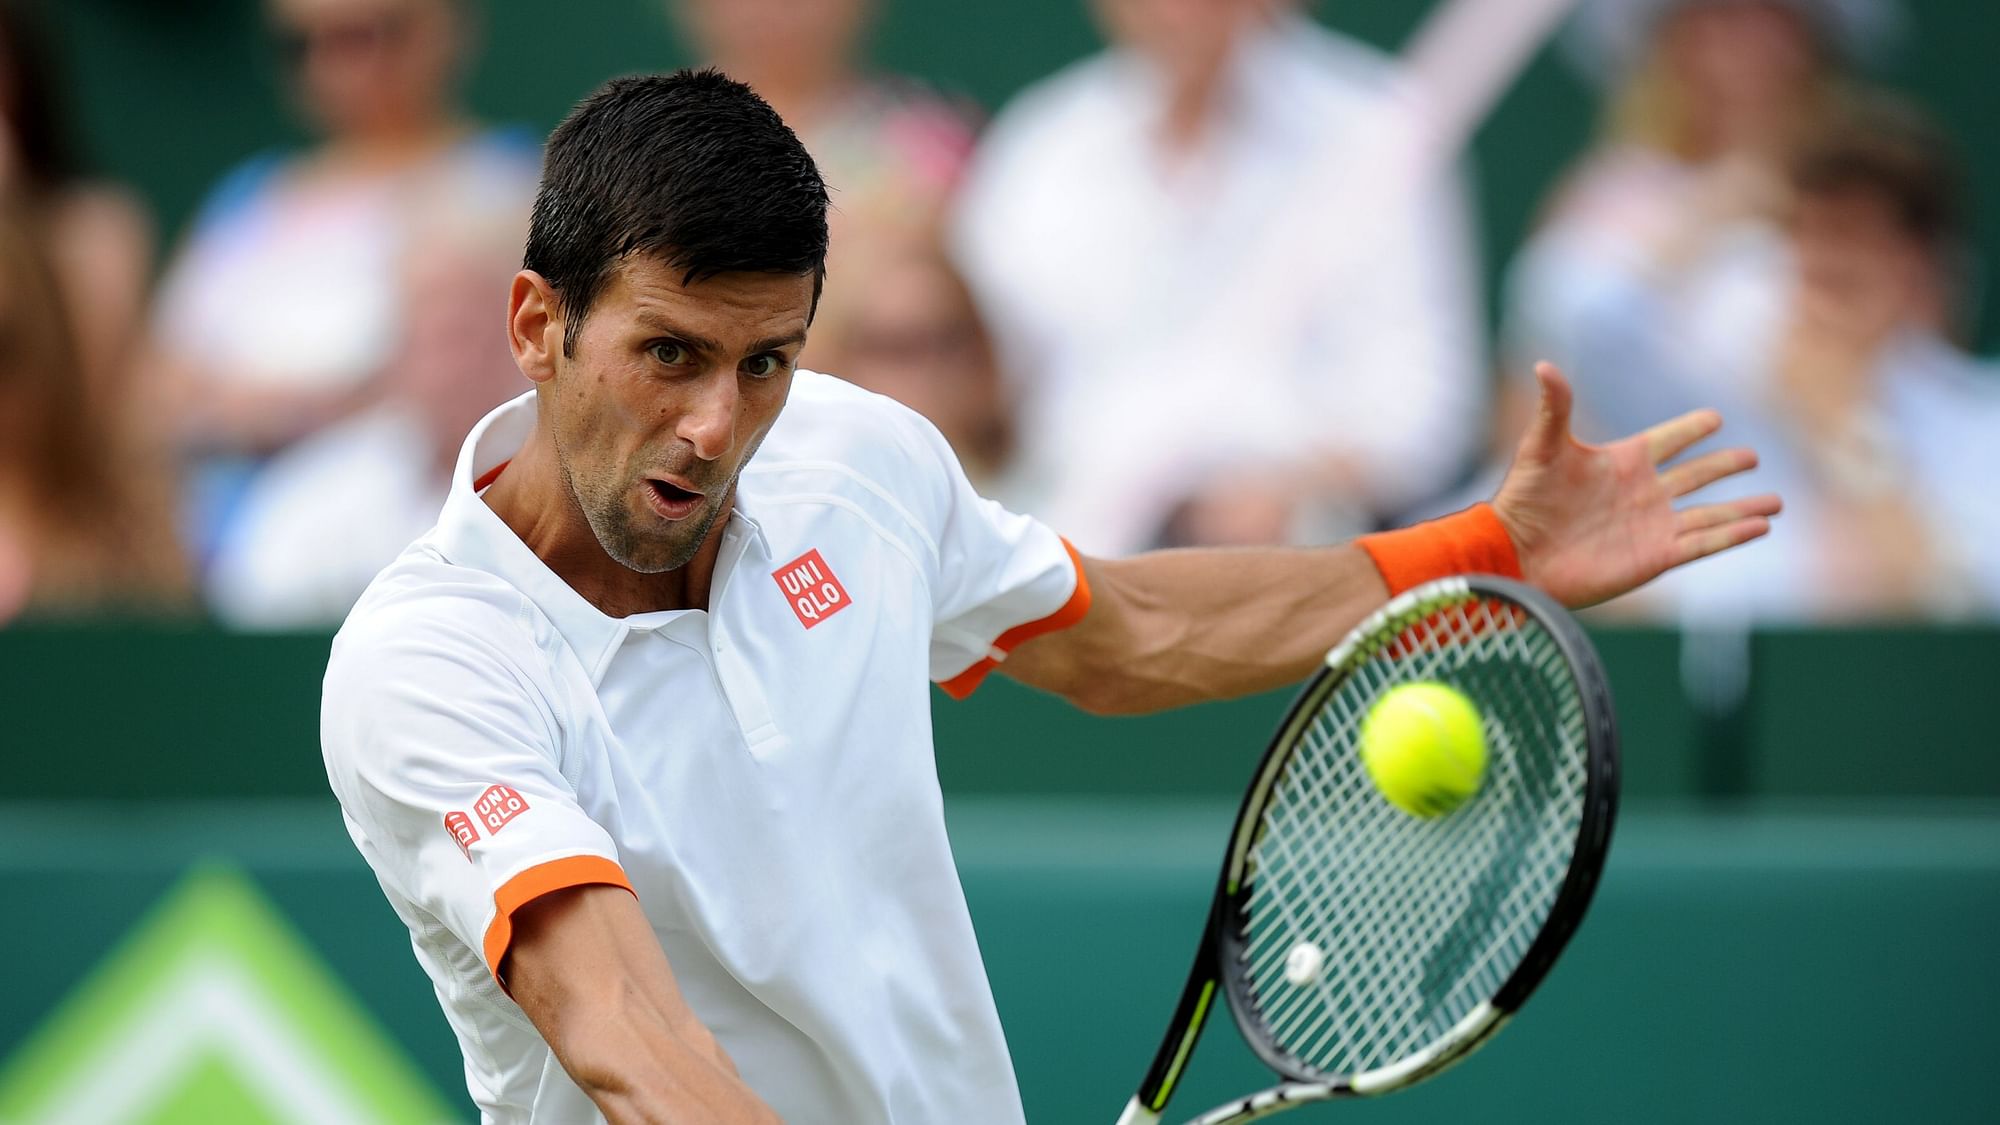 Novak Djokovic returns a shot in an exhibition match before the Wimbledon. (Photo: AP)